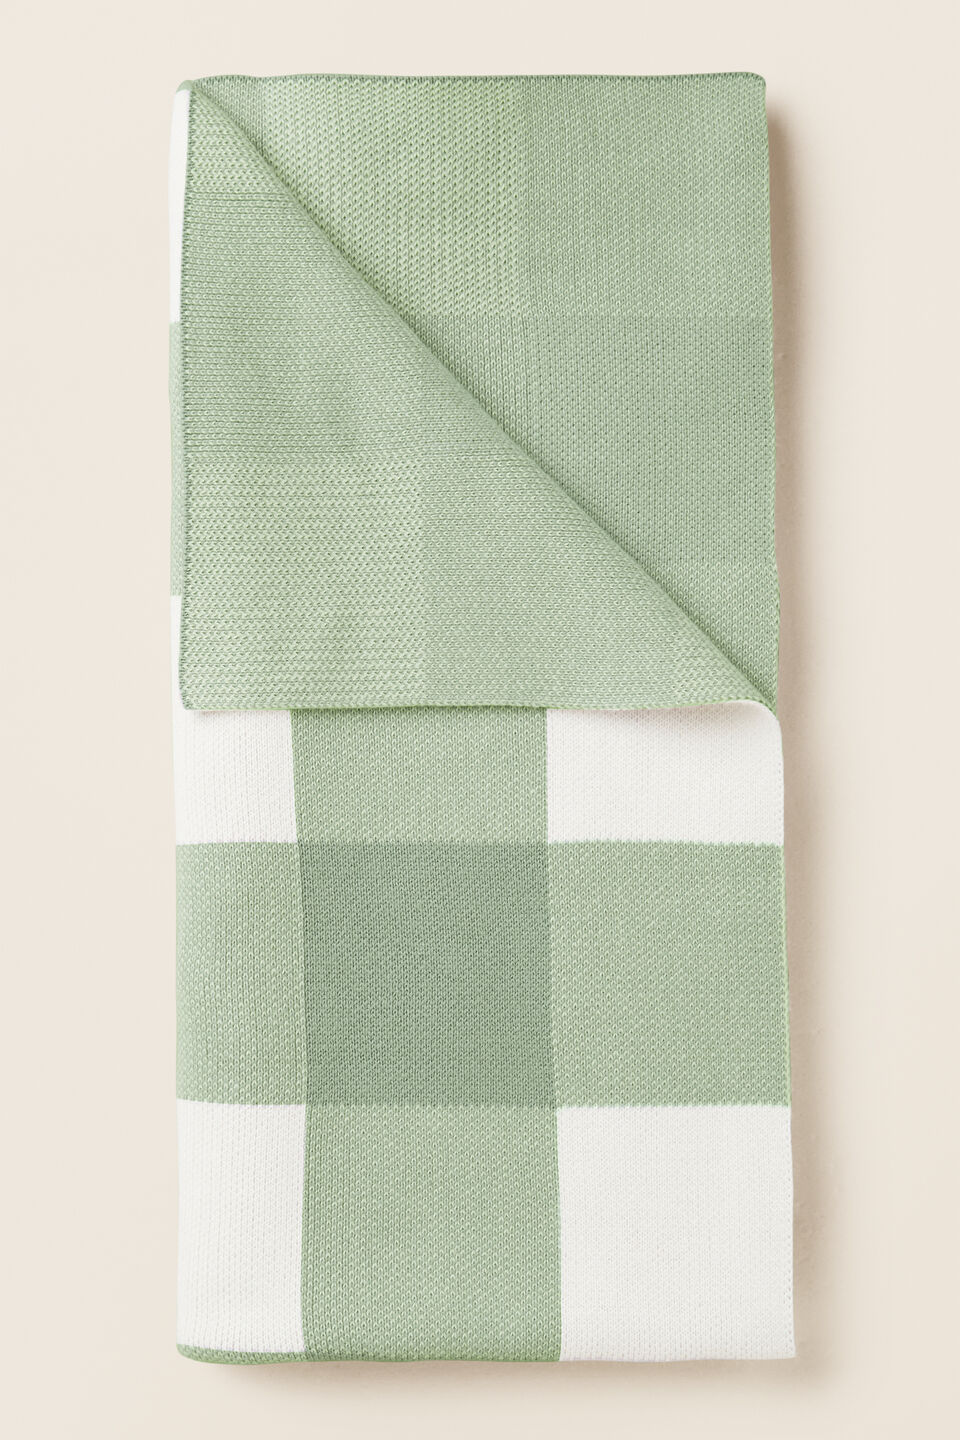 Gingham Knit Blanket  Fern